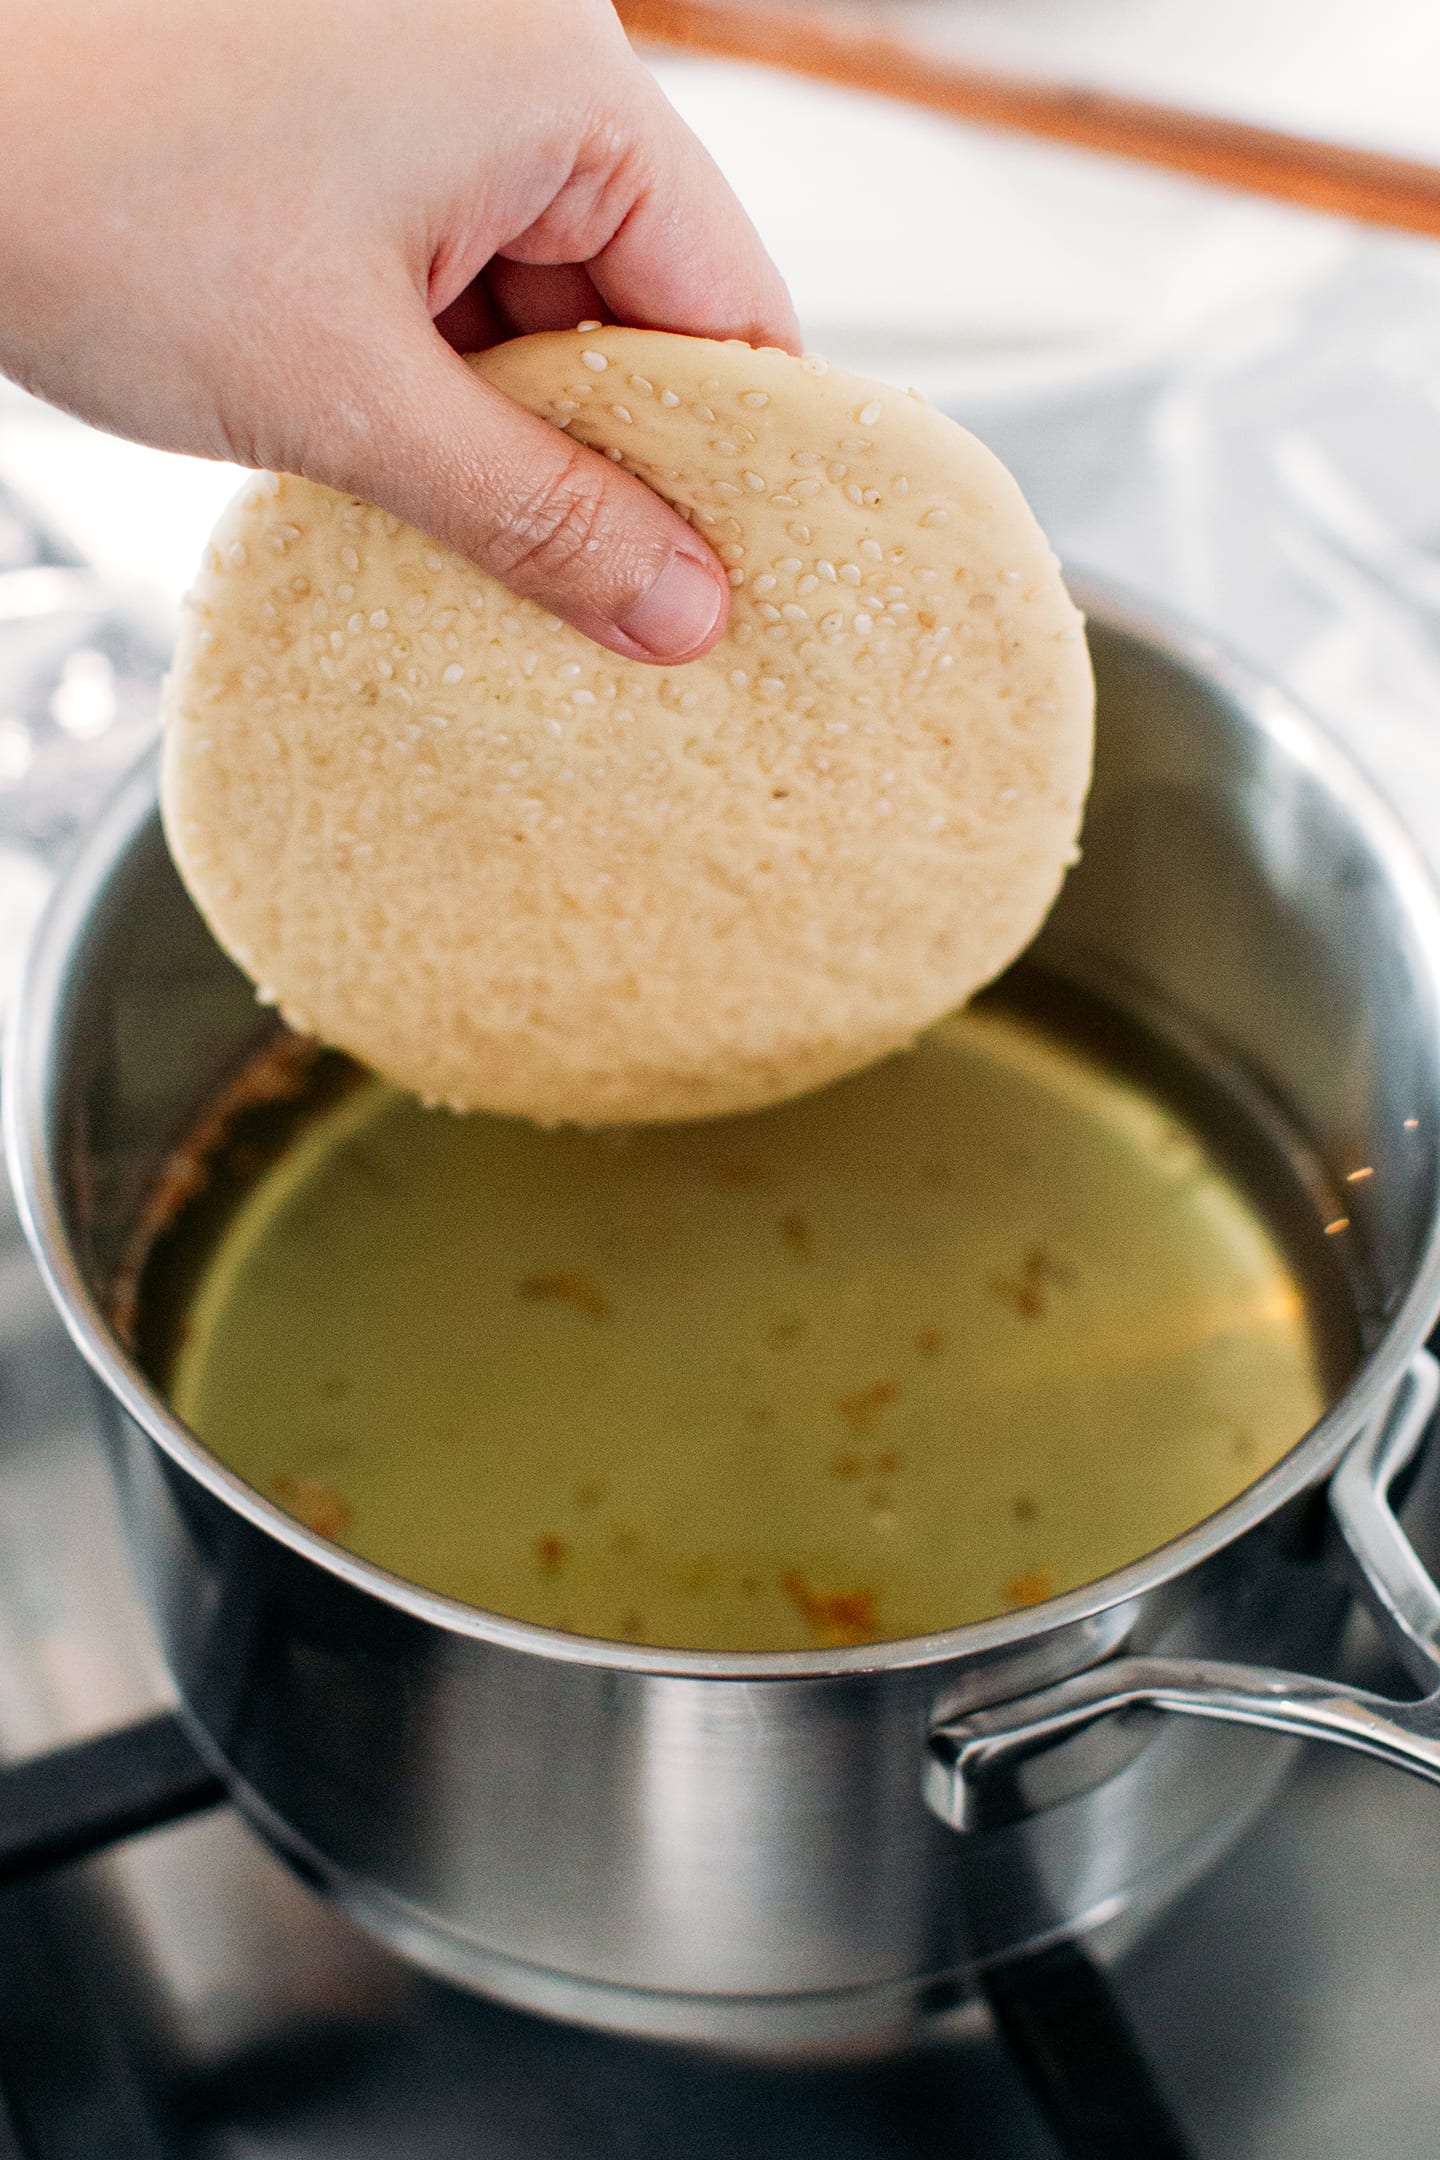 Placing a disc of dough into hot oil.